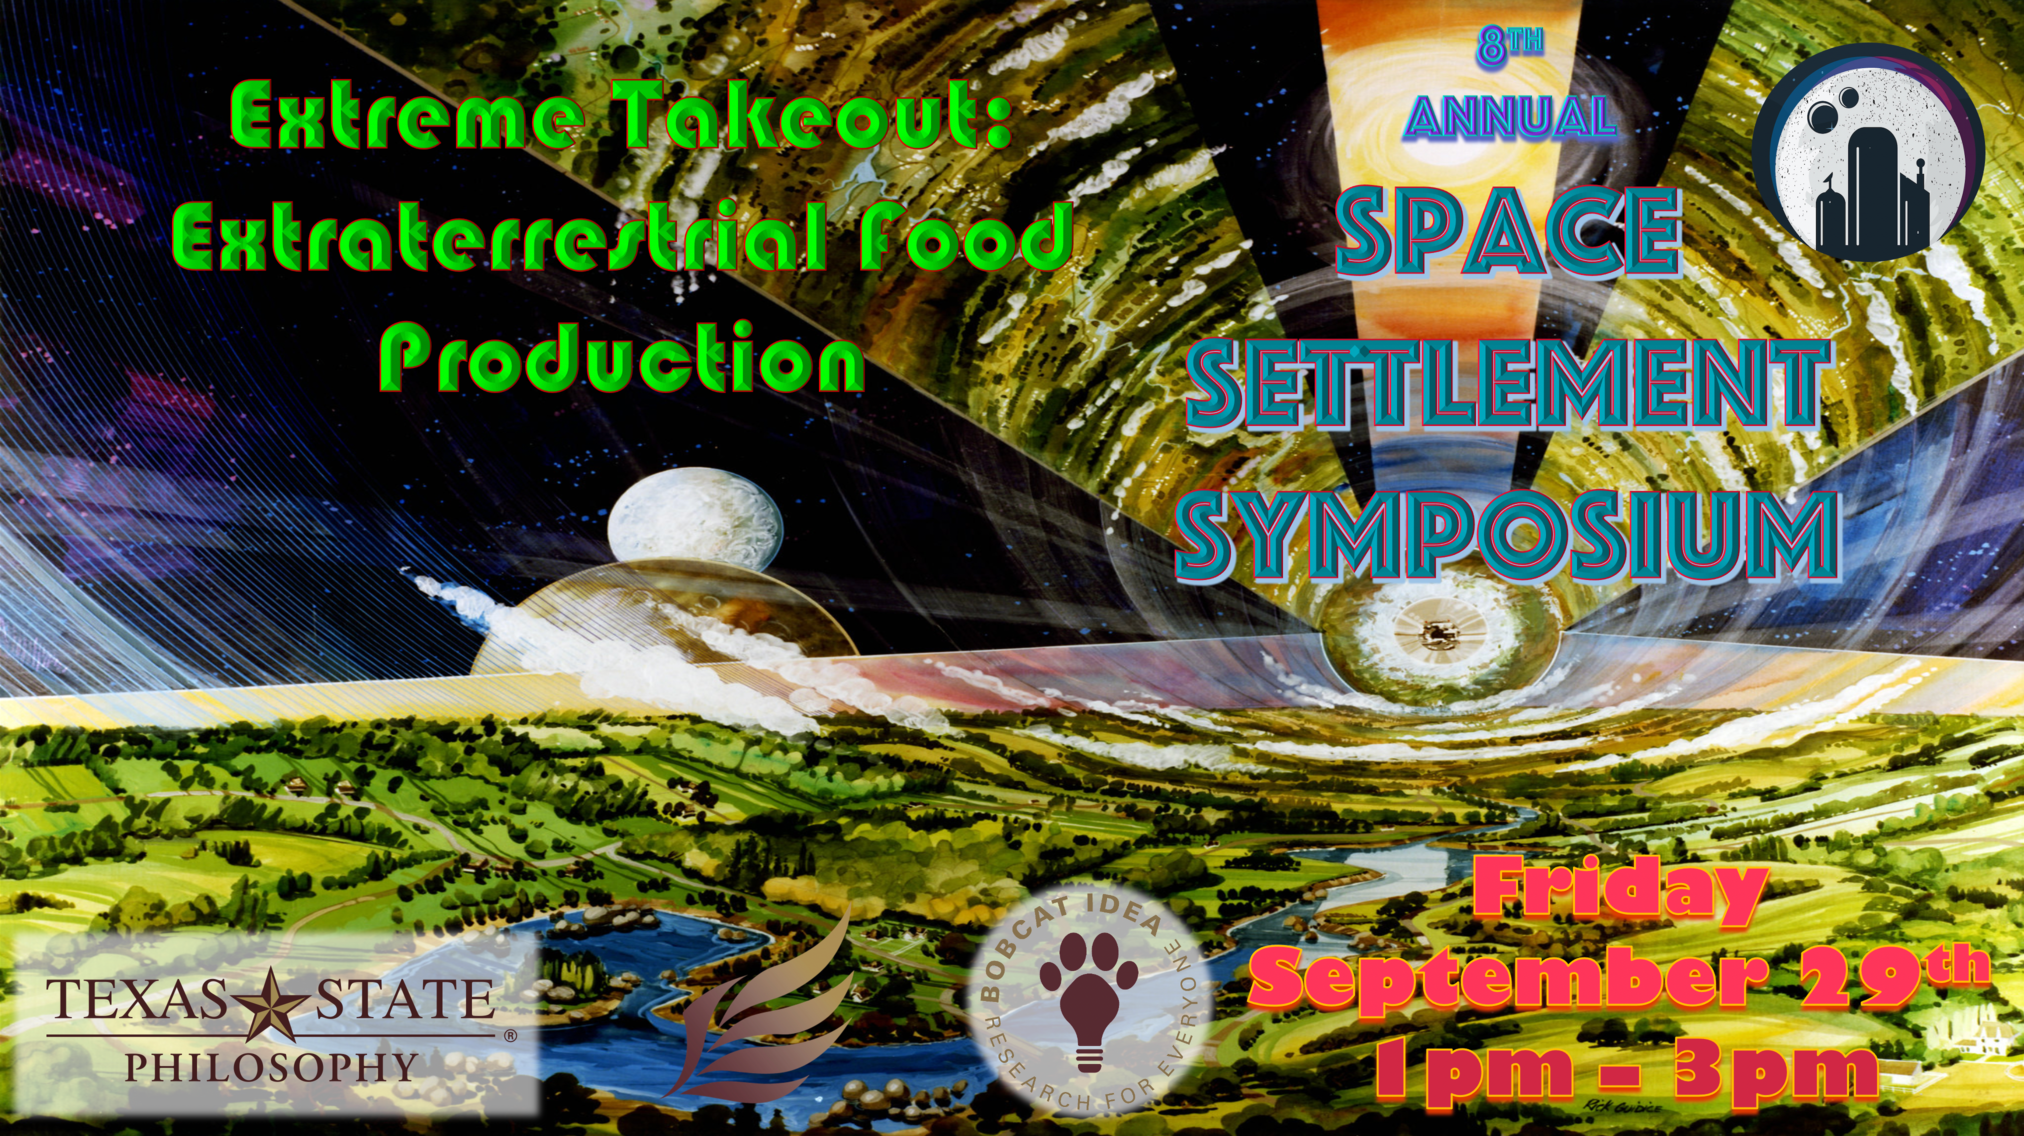 Space Settlement Symposium image